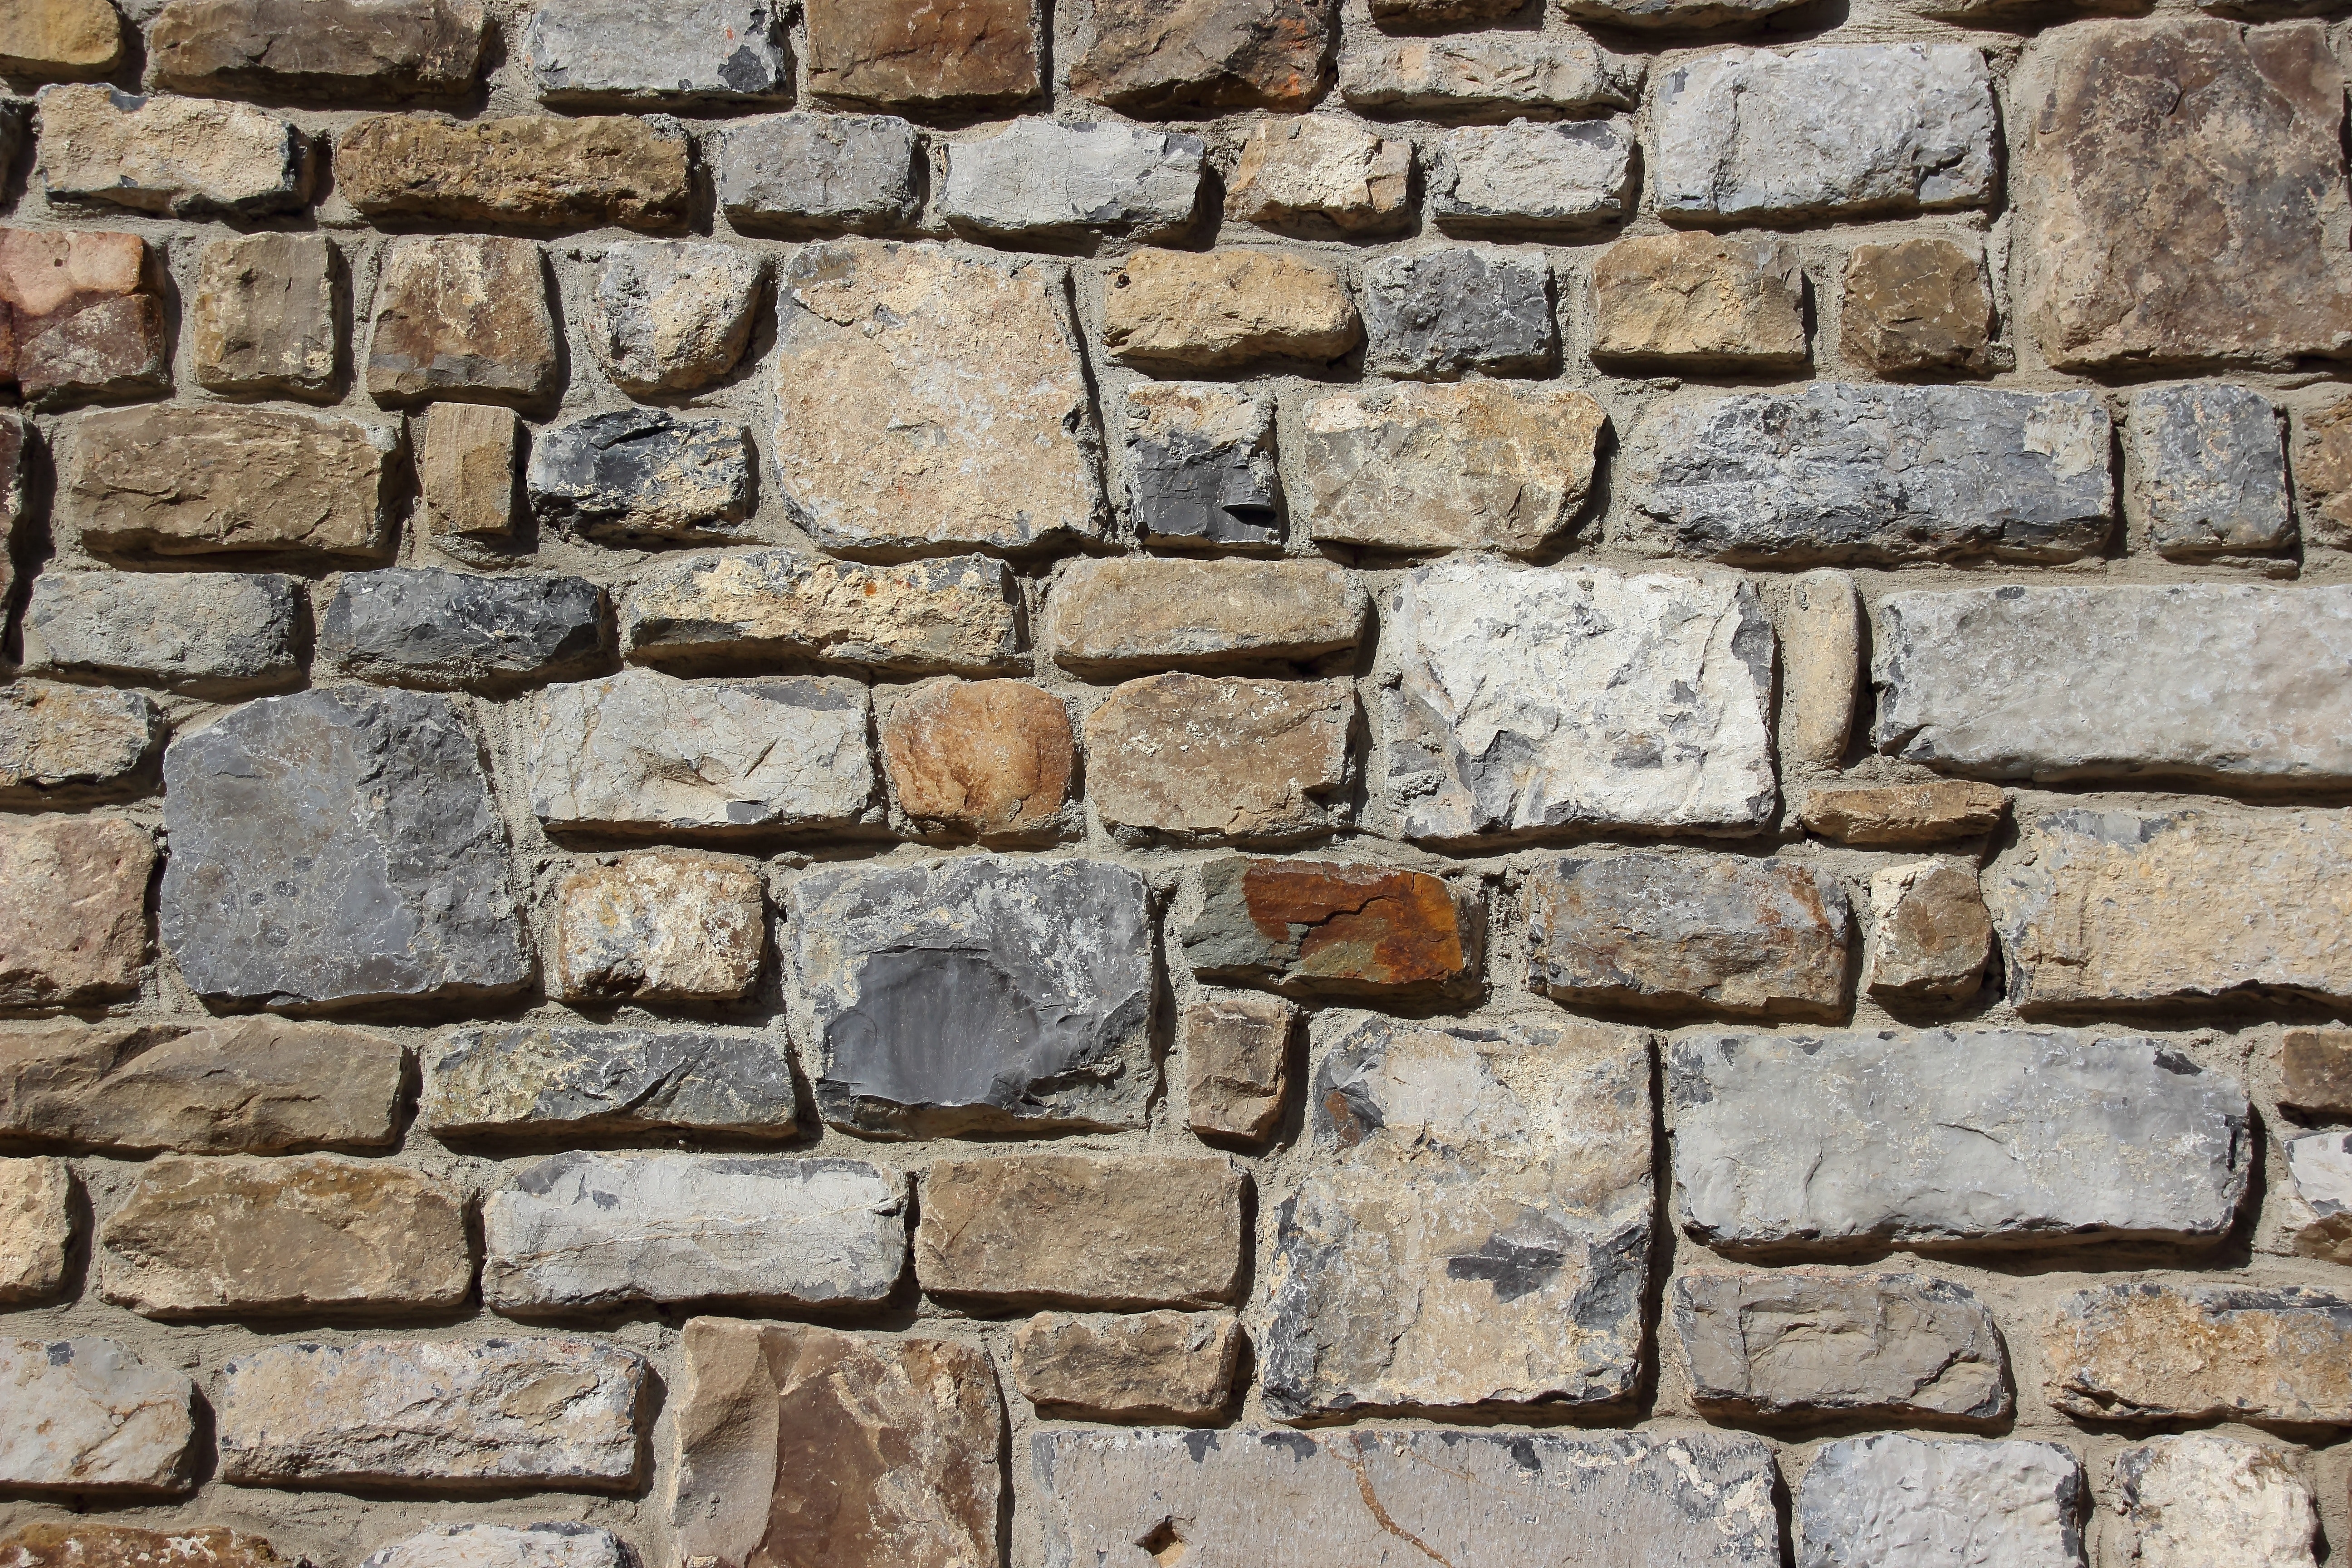 1000+ Engaging Stone Wall Photos · Pexels · Free Stock Photos